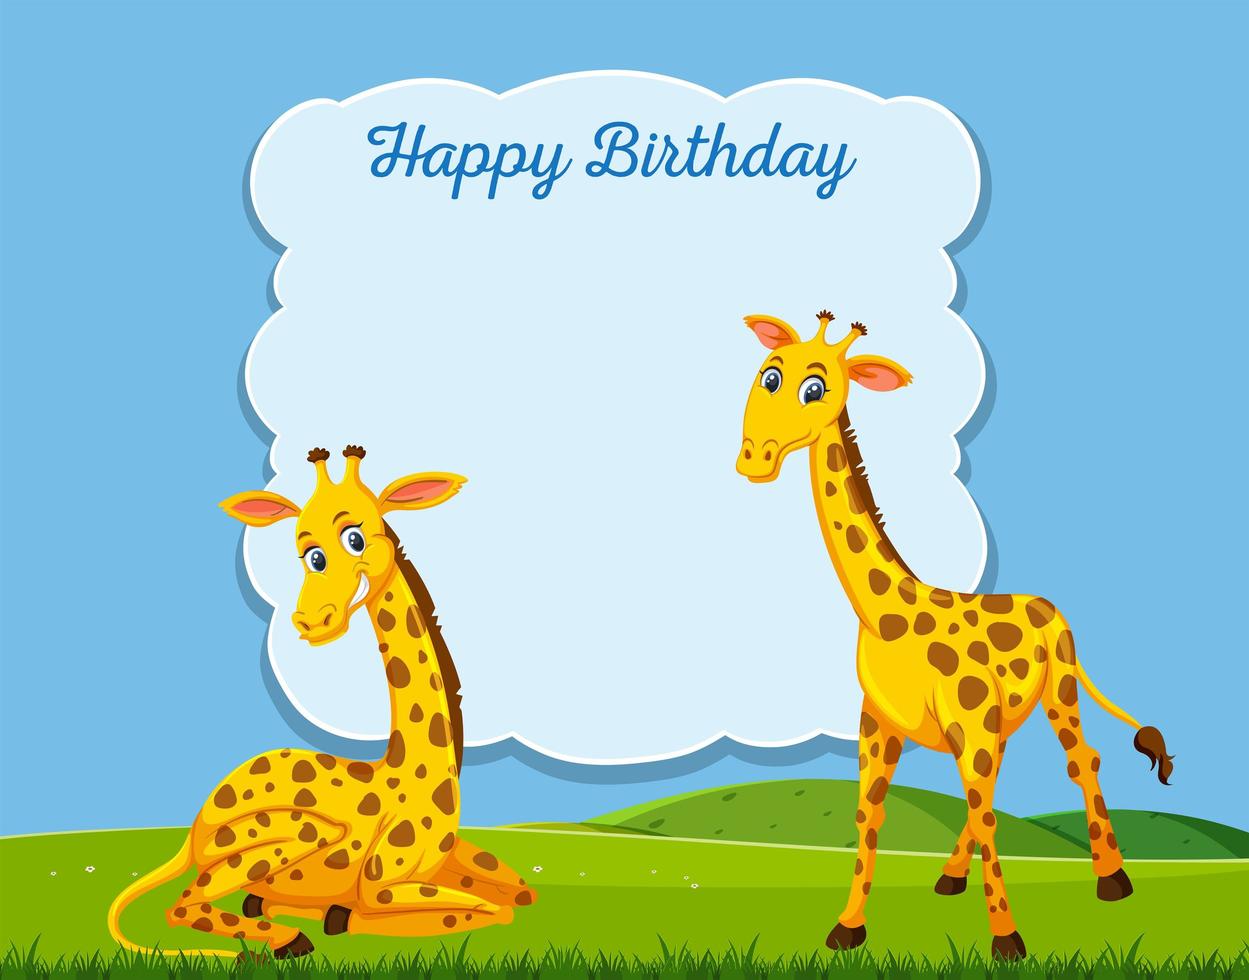 Giraffe on happy birthday card template vector